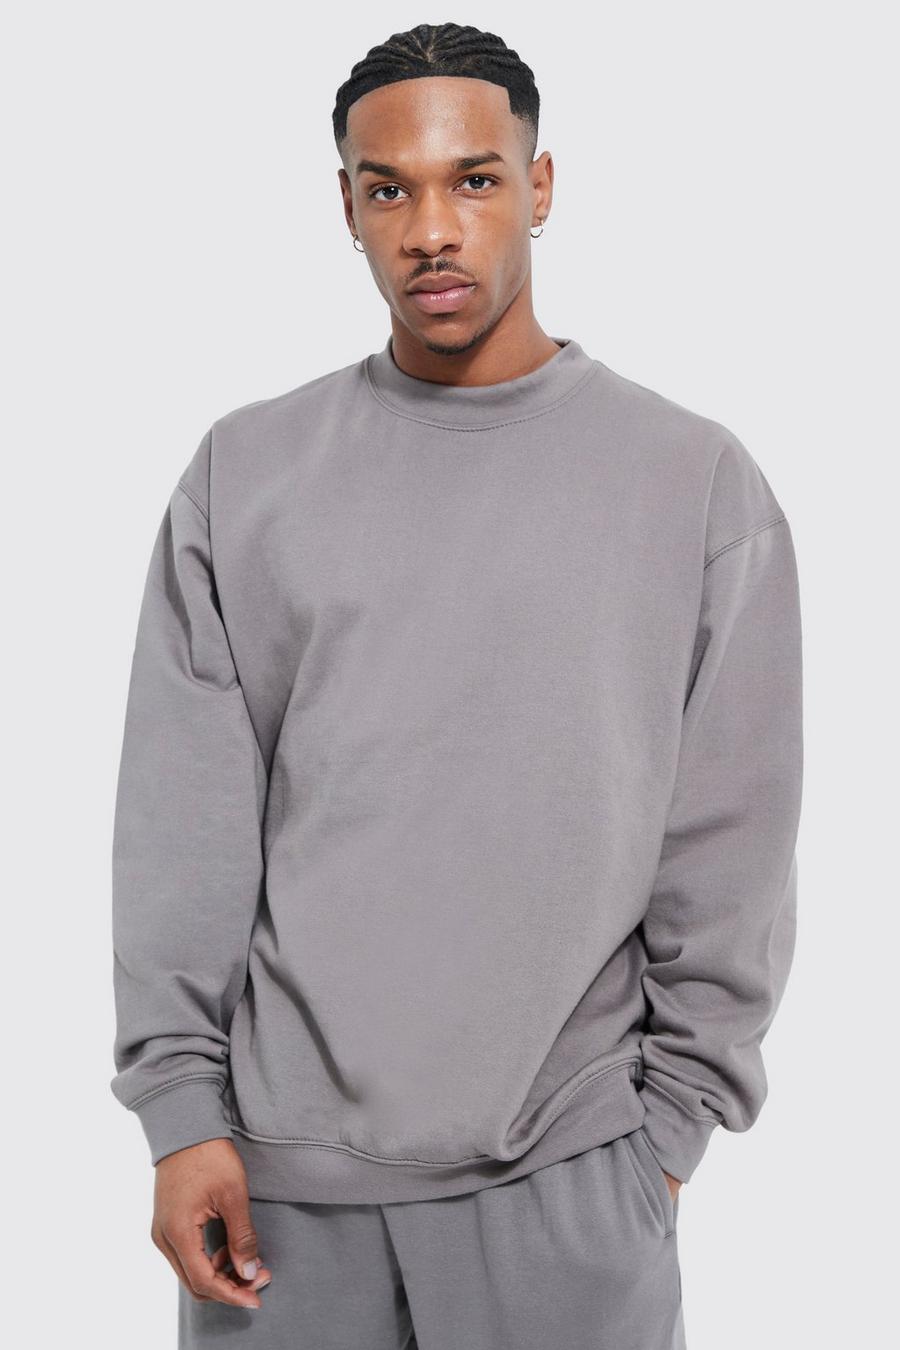 Charcoal grey Basic Oversized Extended Neck Sweatshirt